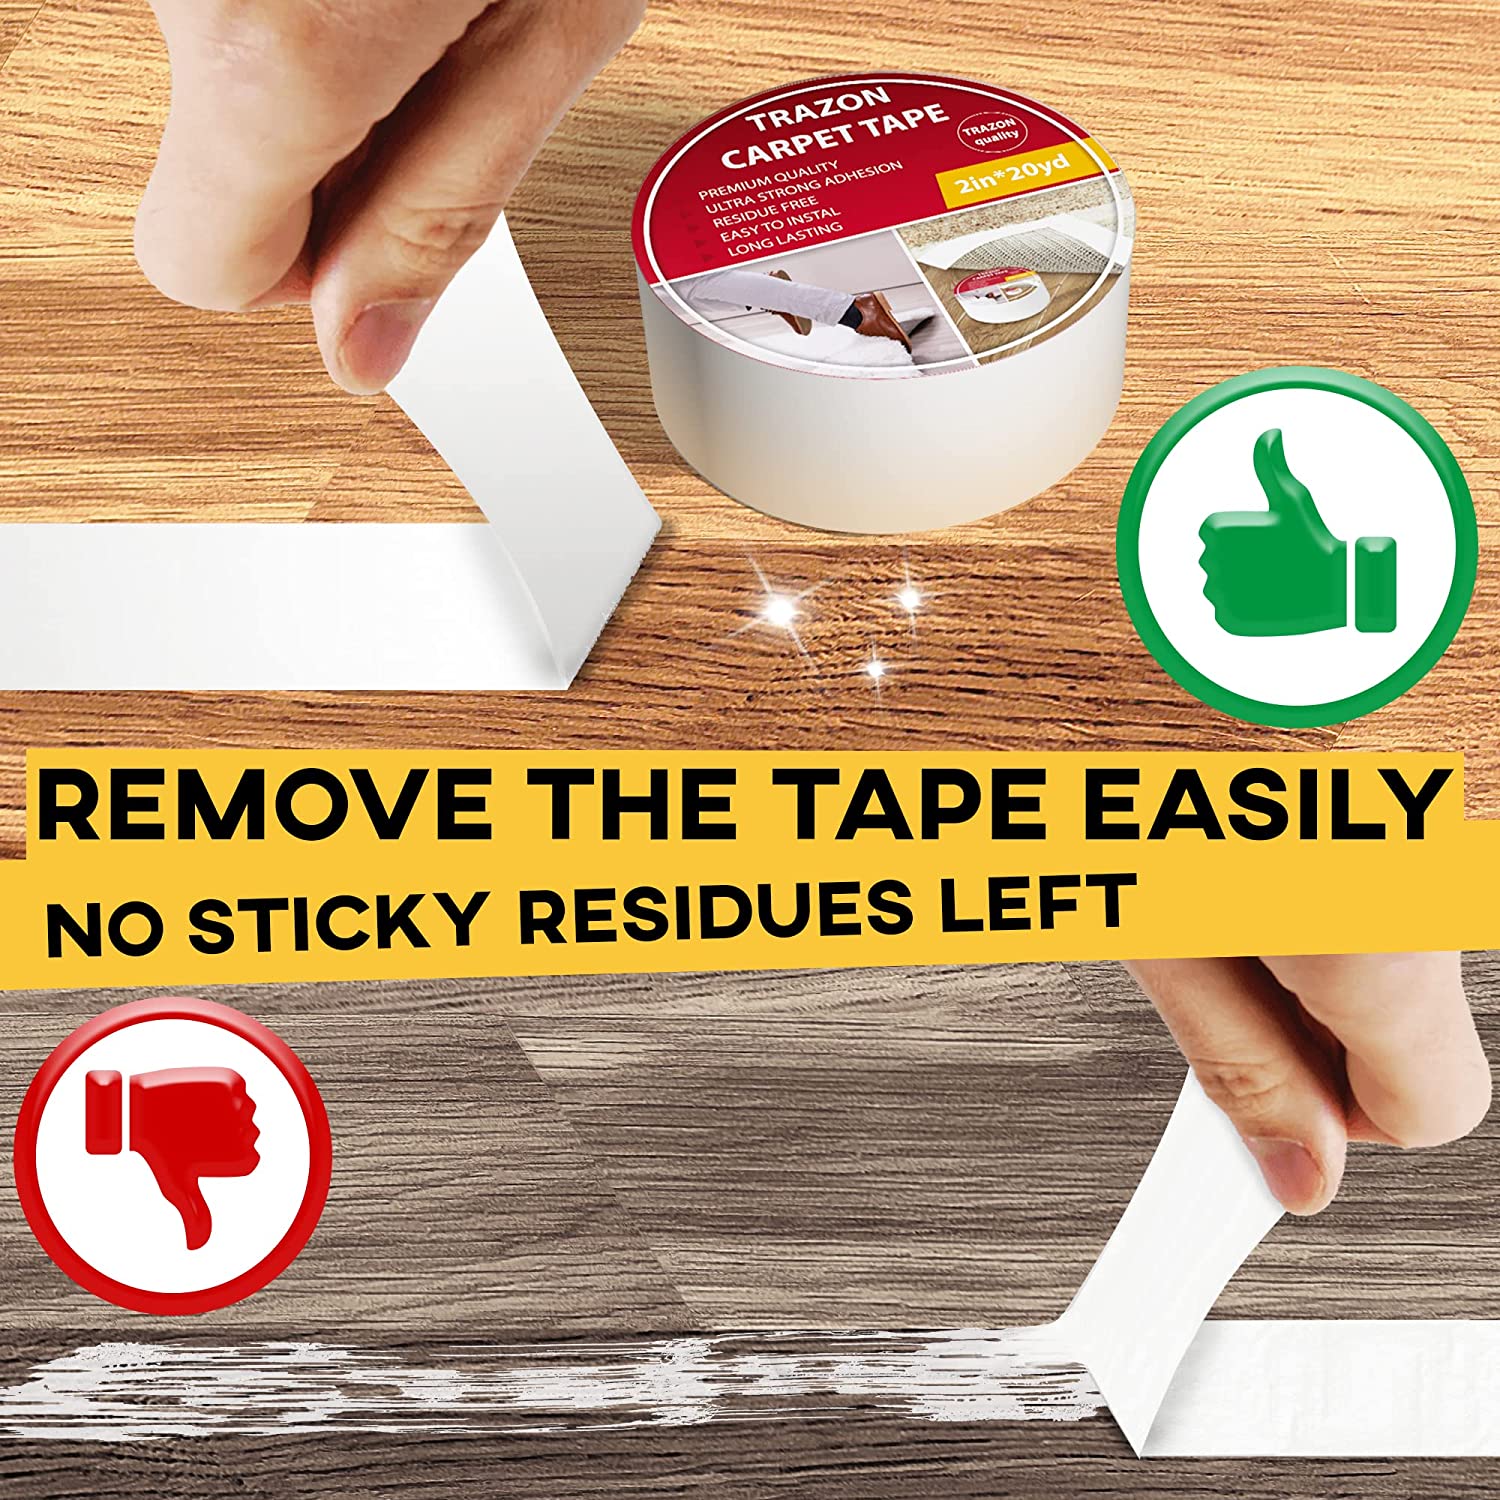 Rug Gripper Tape - Carpet Tape Double Sided - Rug Tape for